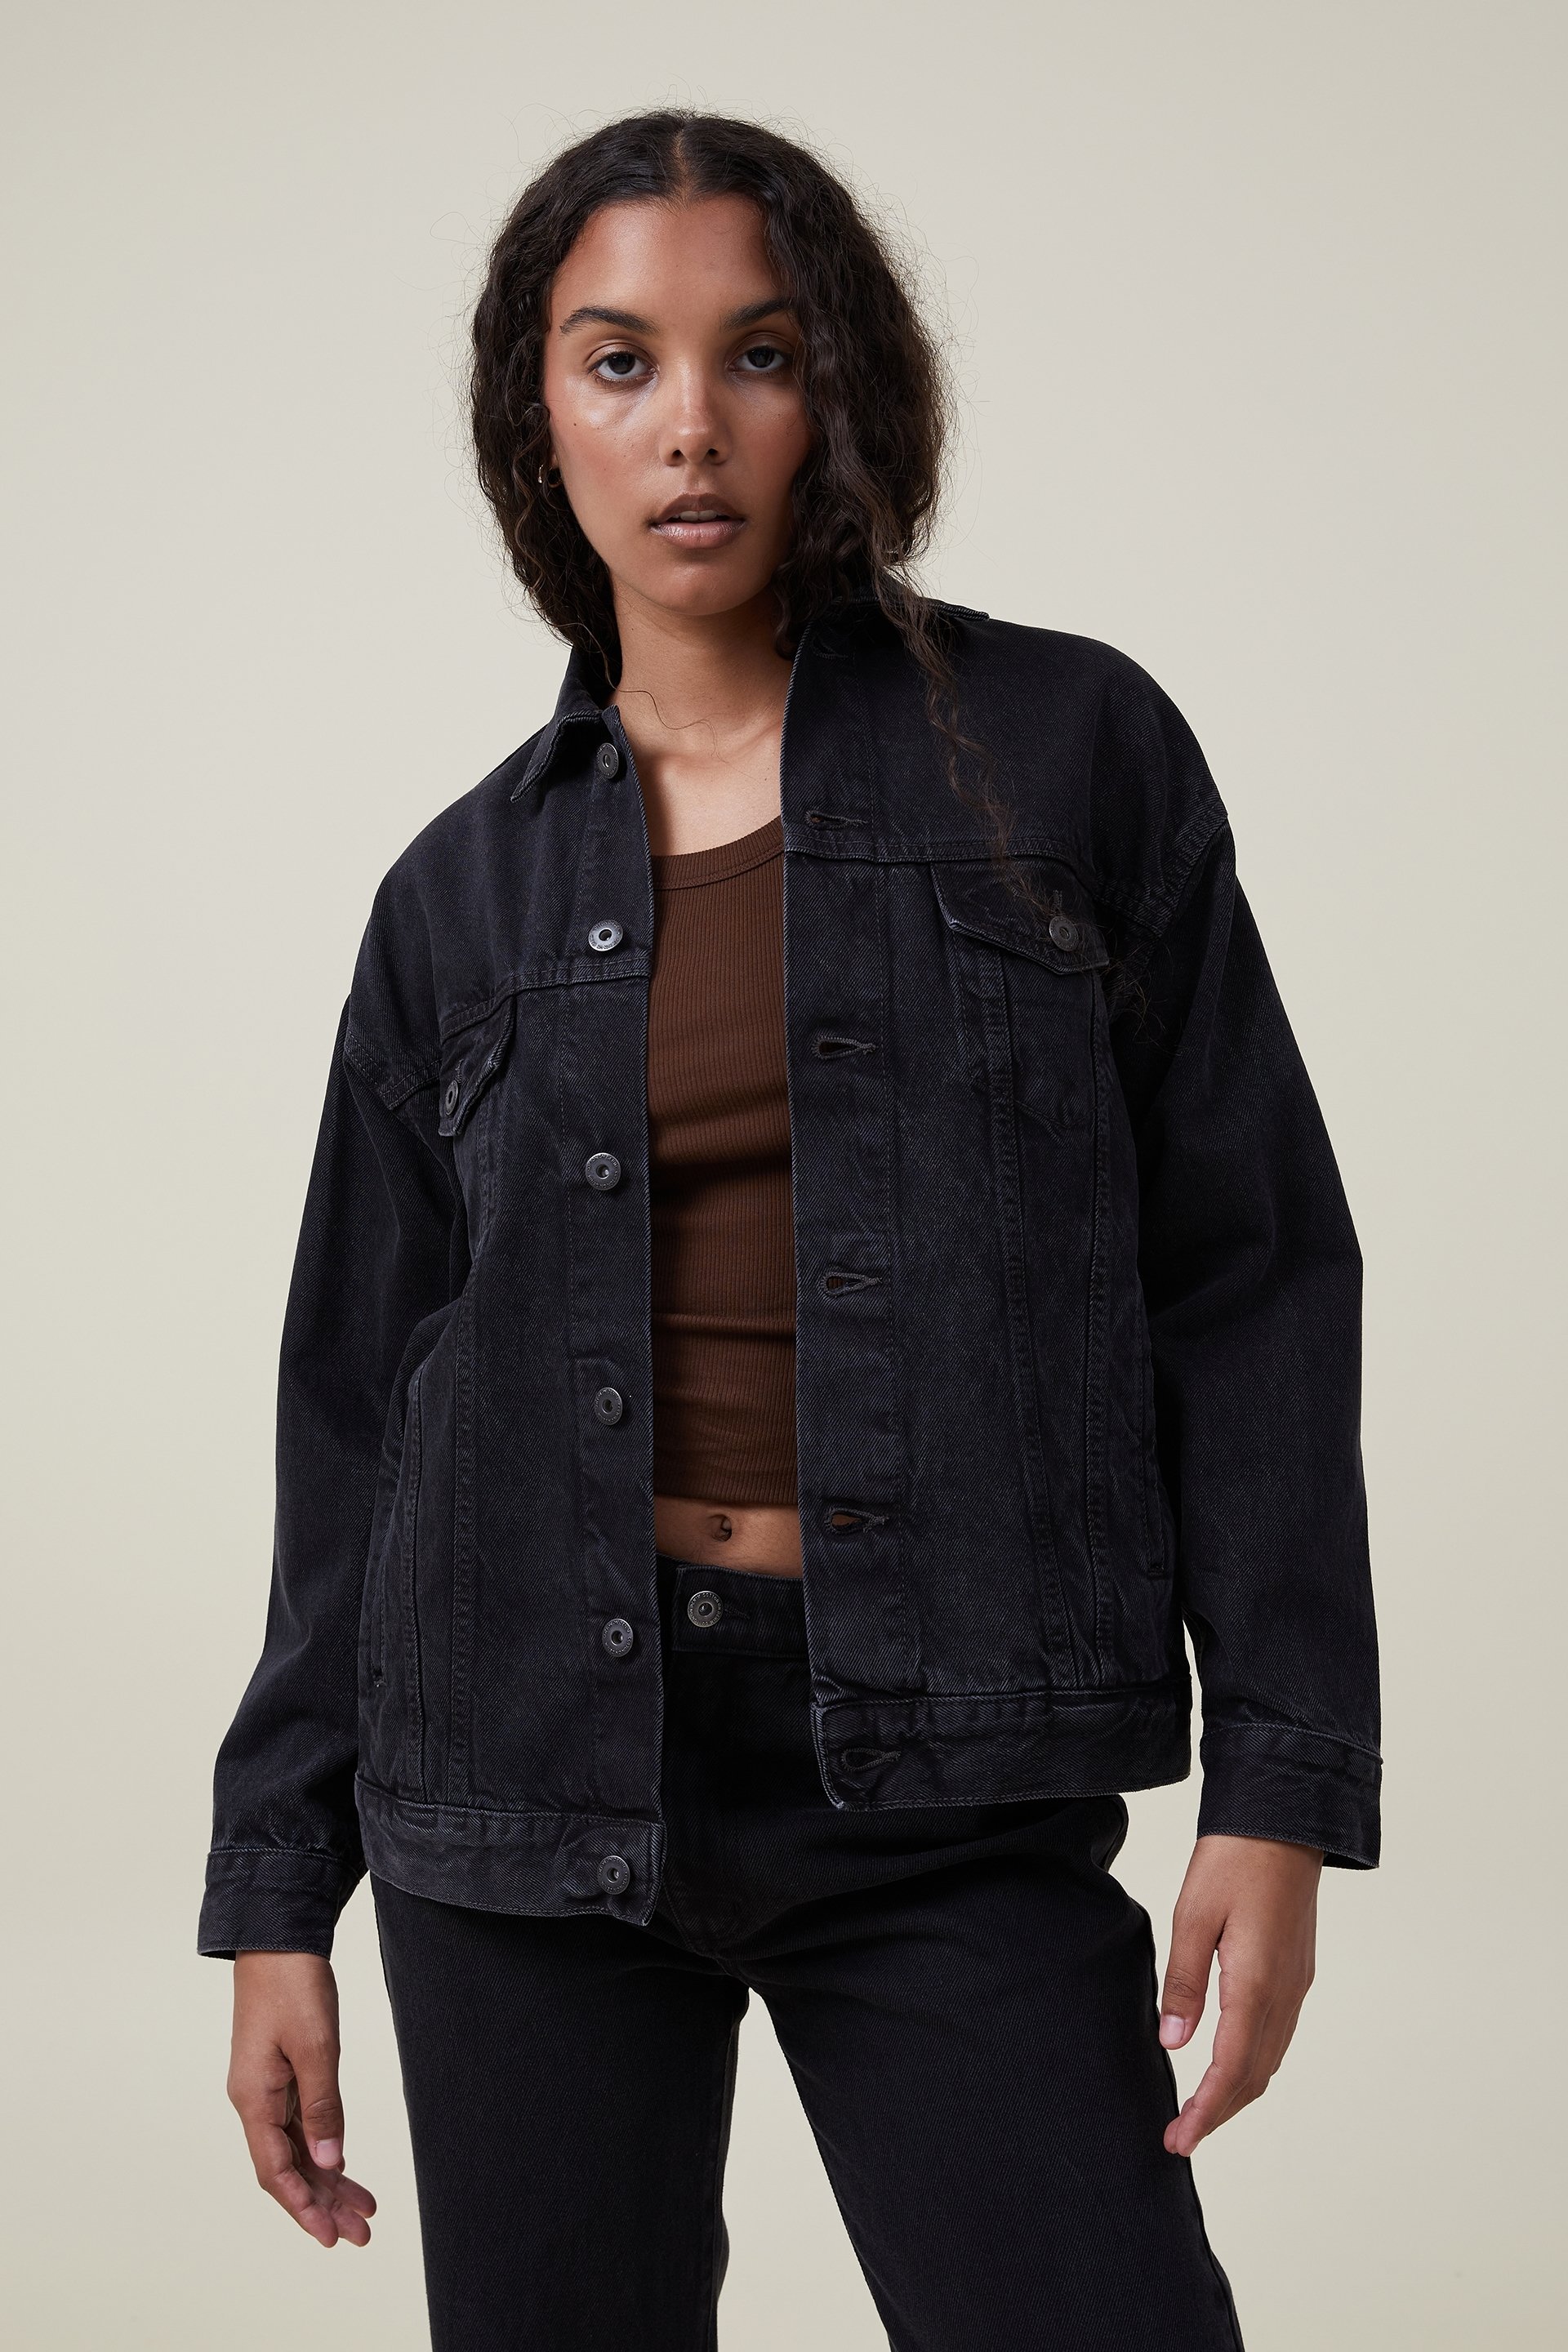 Cotton On Women - The Oversized Denim Jacket - Graphite black